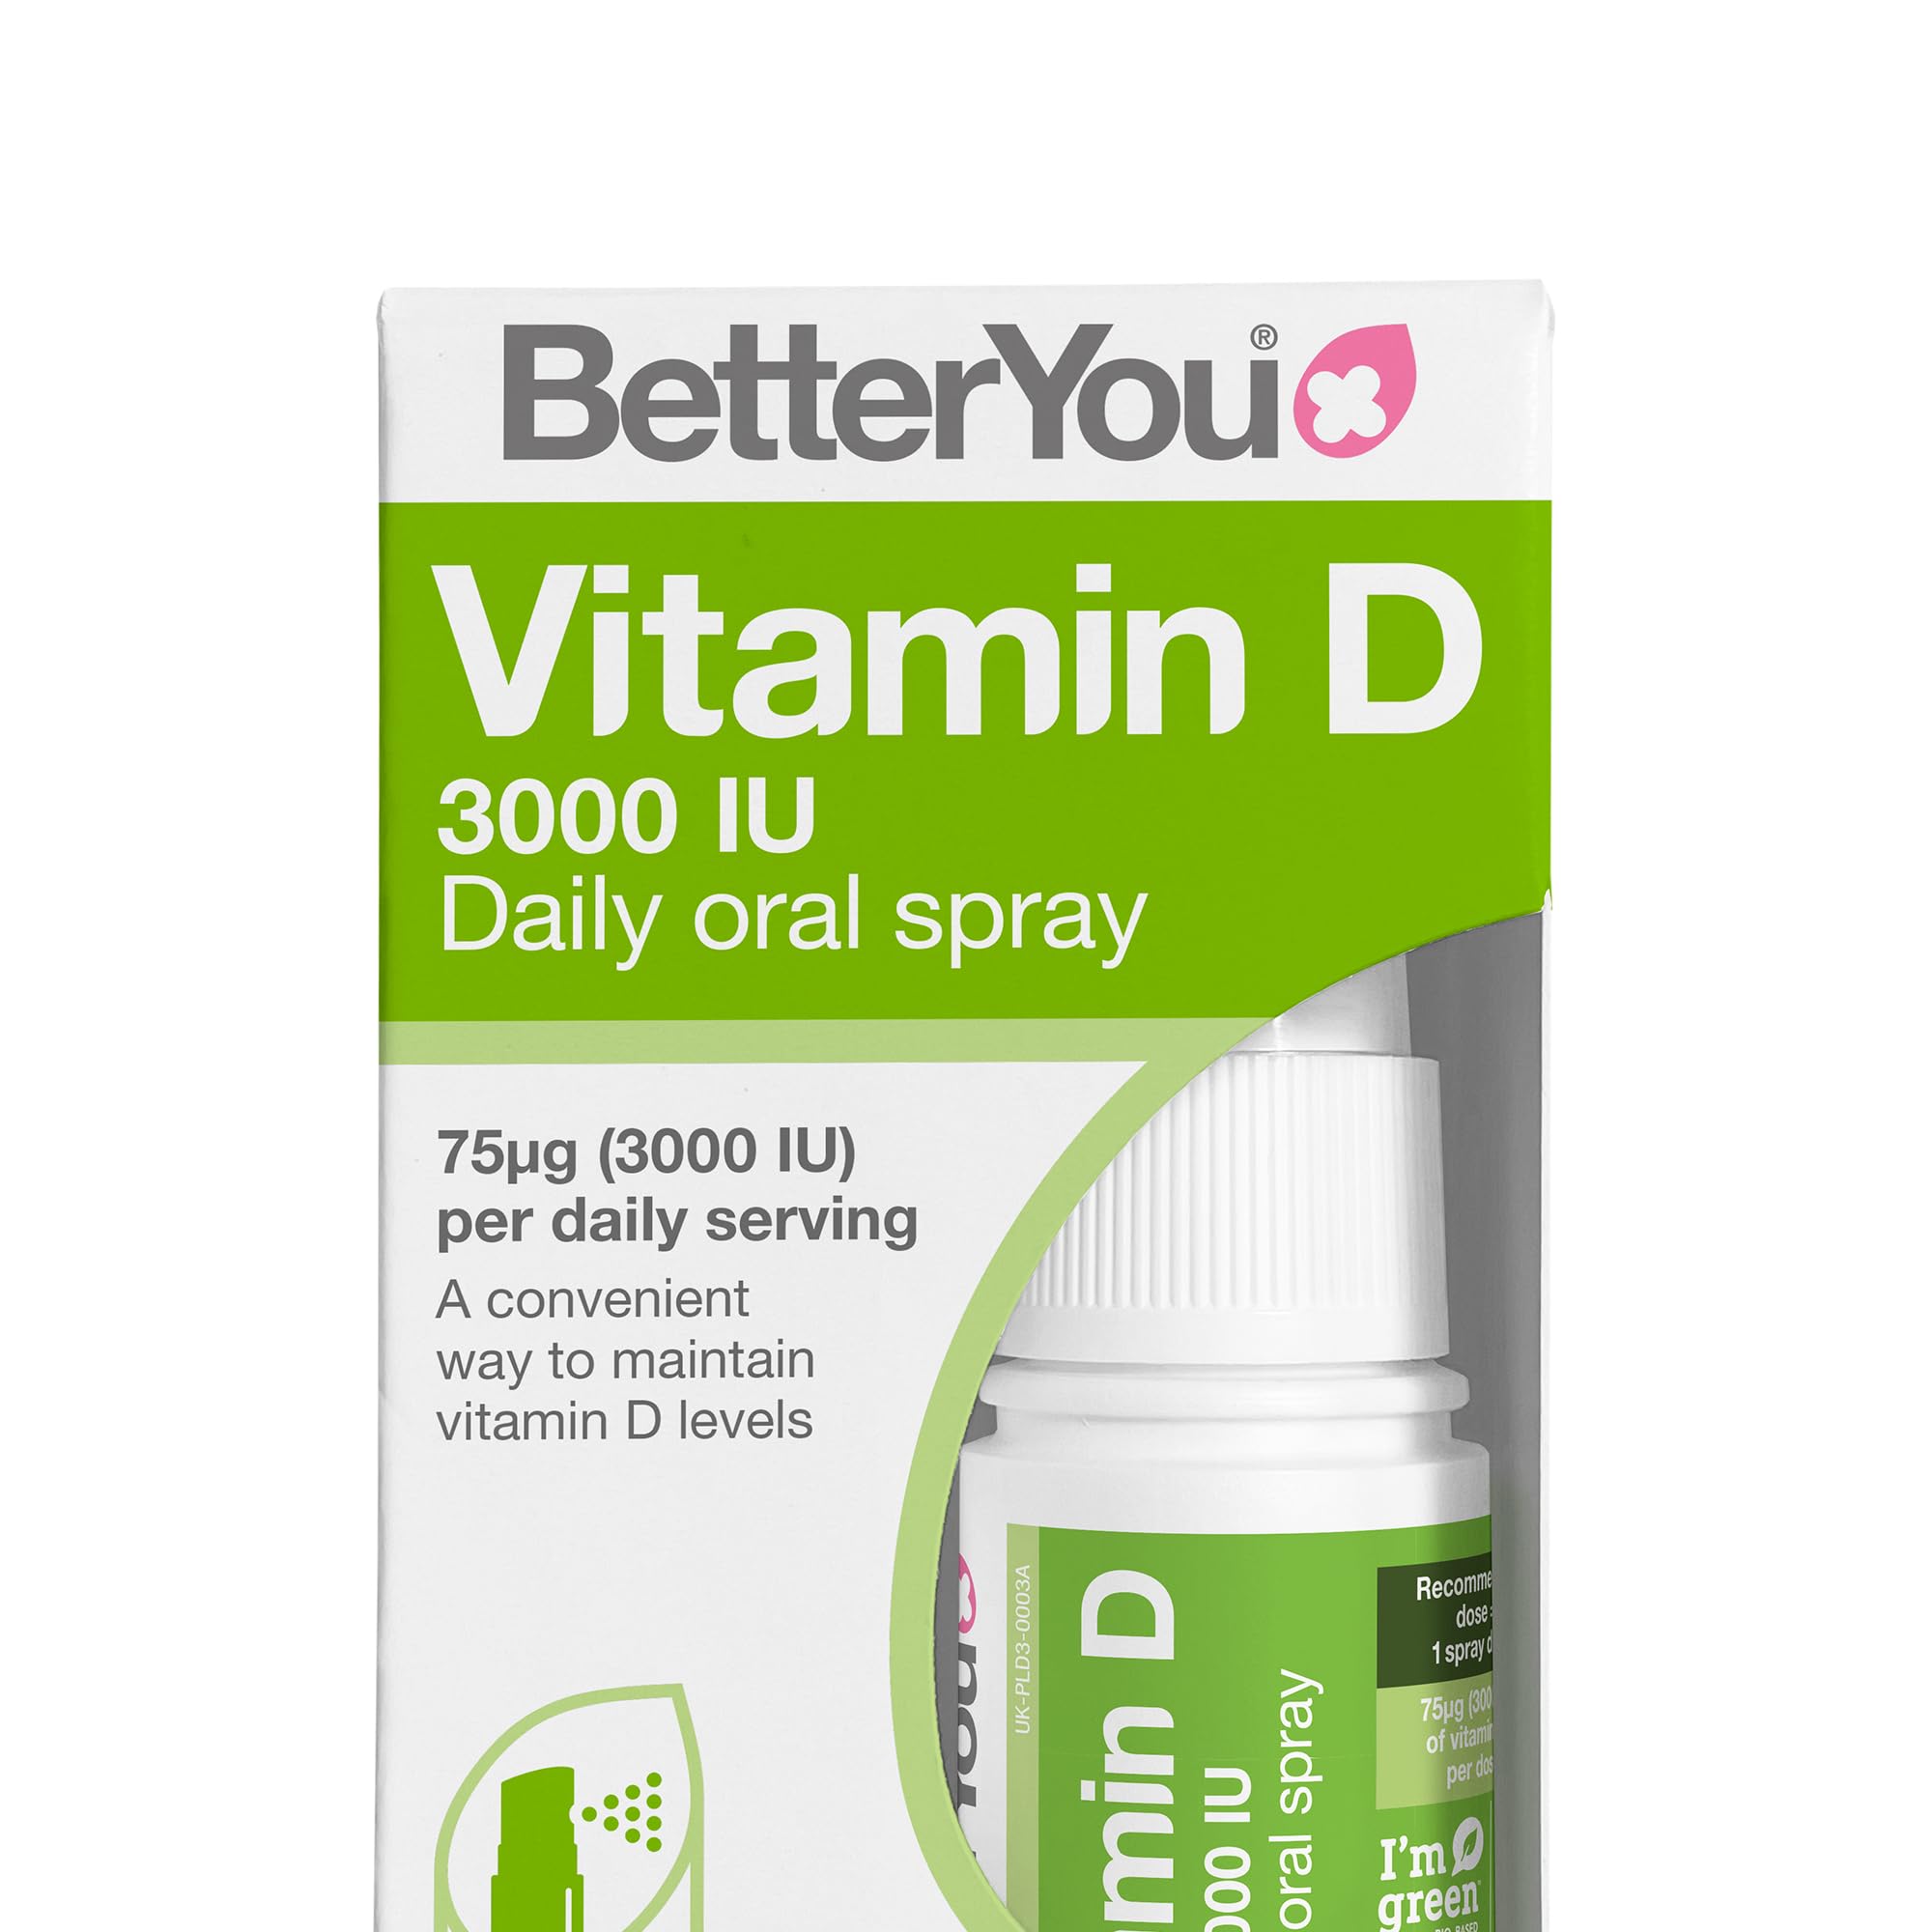 vitamin d spray amazon